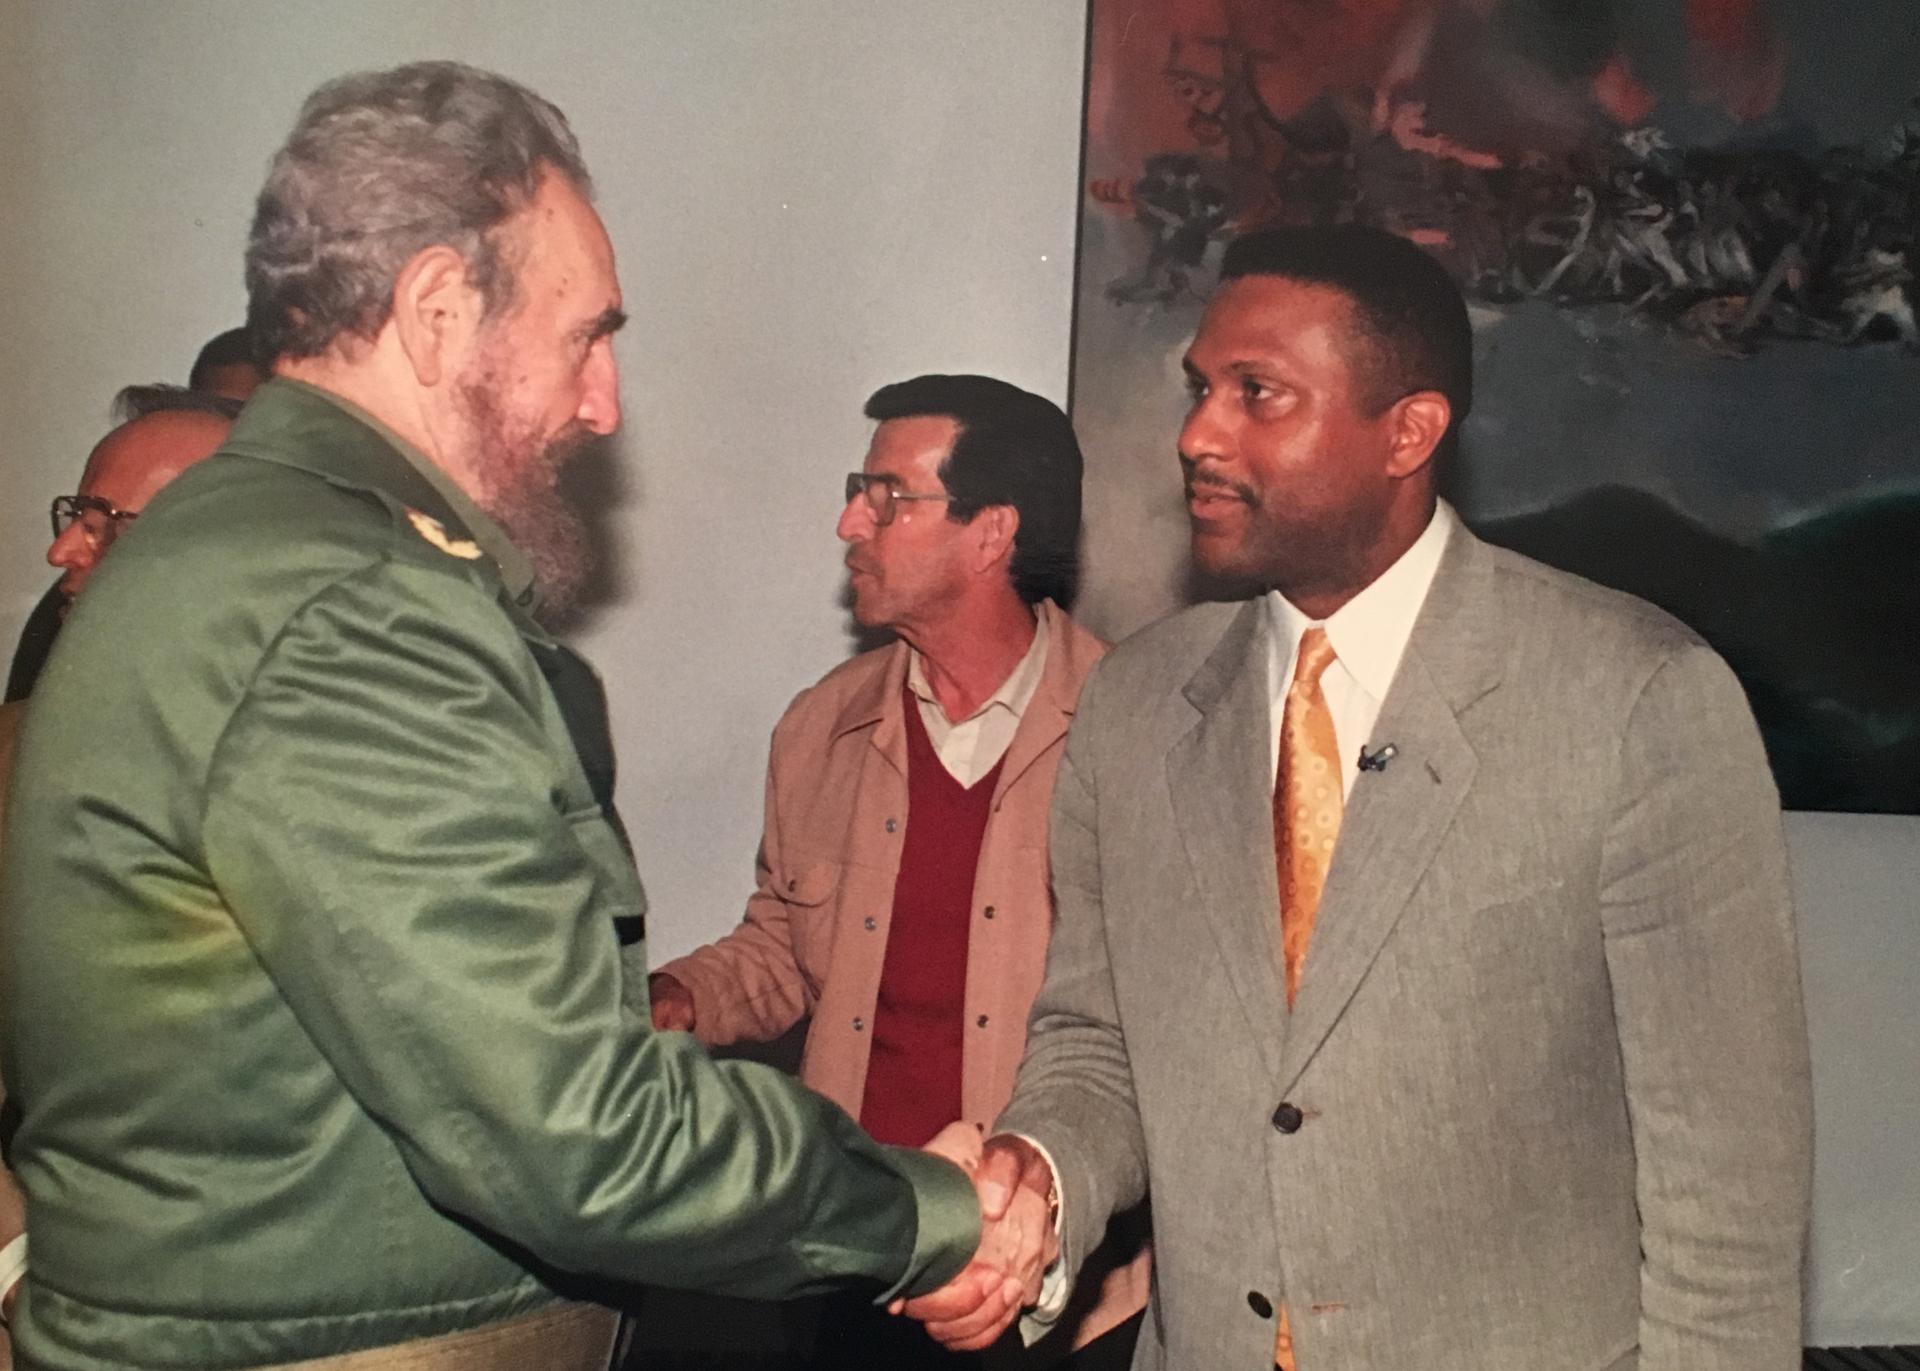 Tavis Smiley and Fidel Castro shake hands.